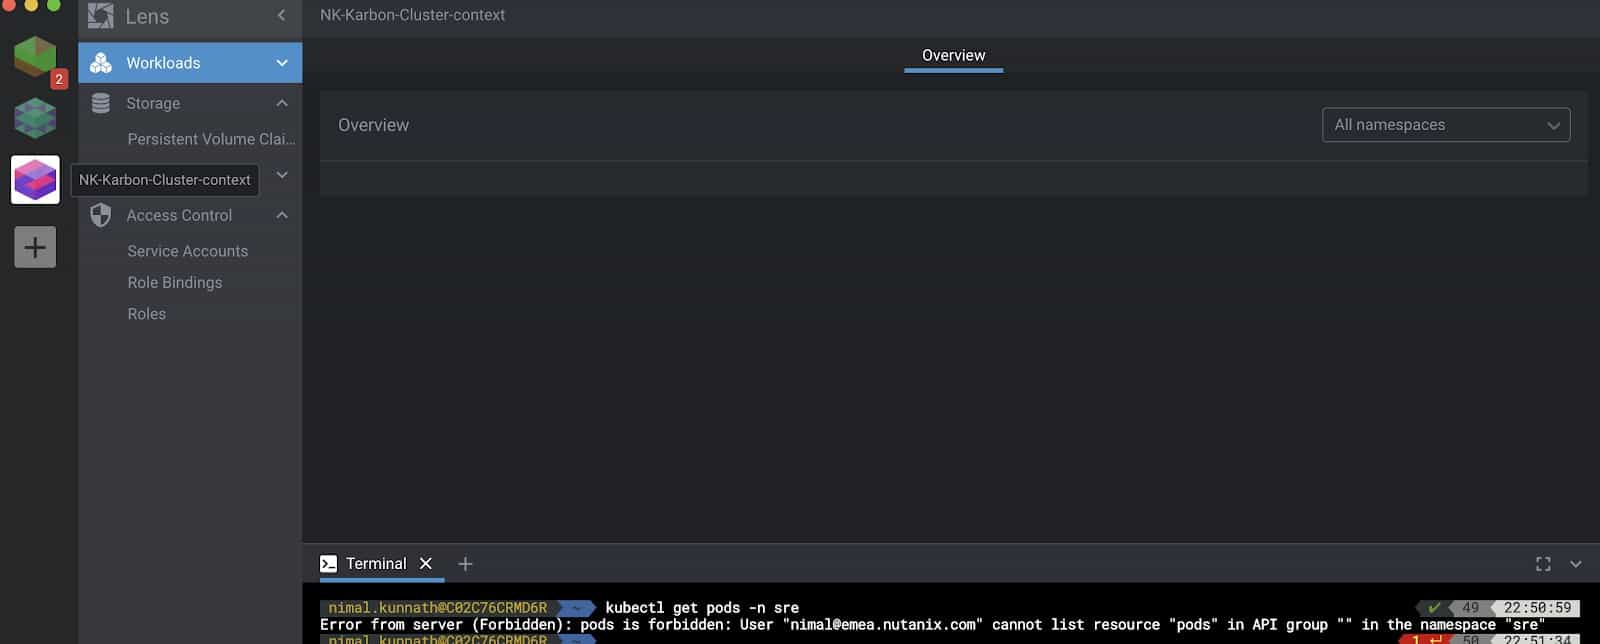 Screenshot showing kubeconfig file imported but error from server (forbidden)